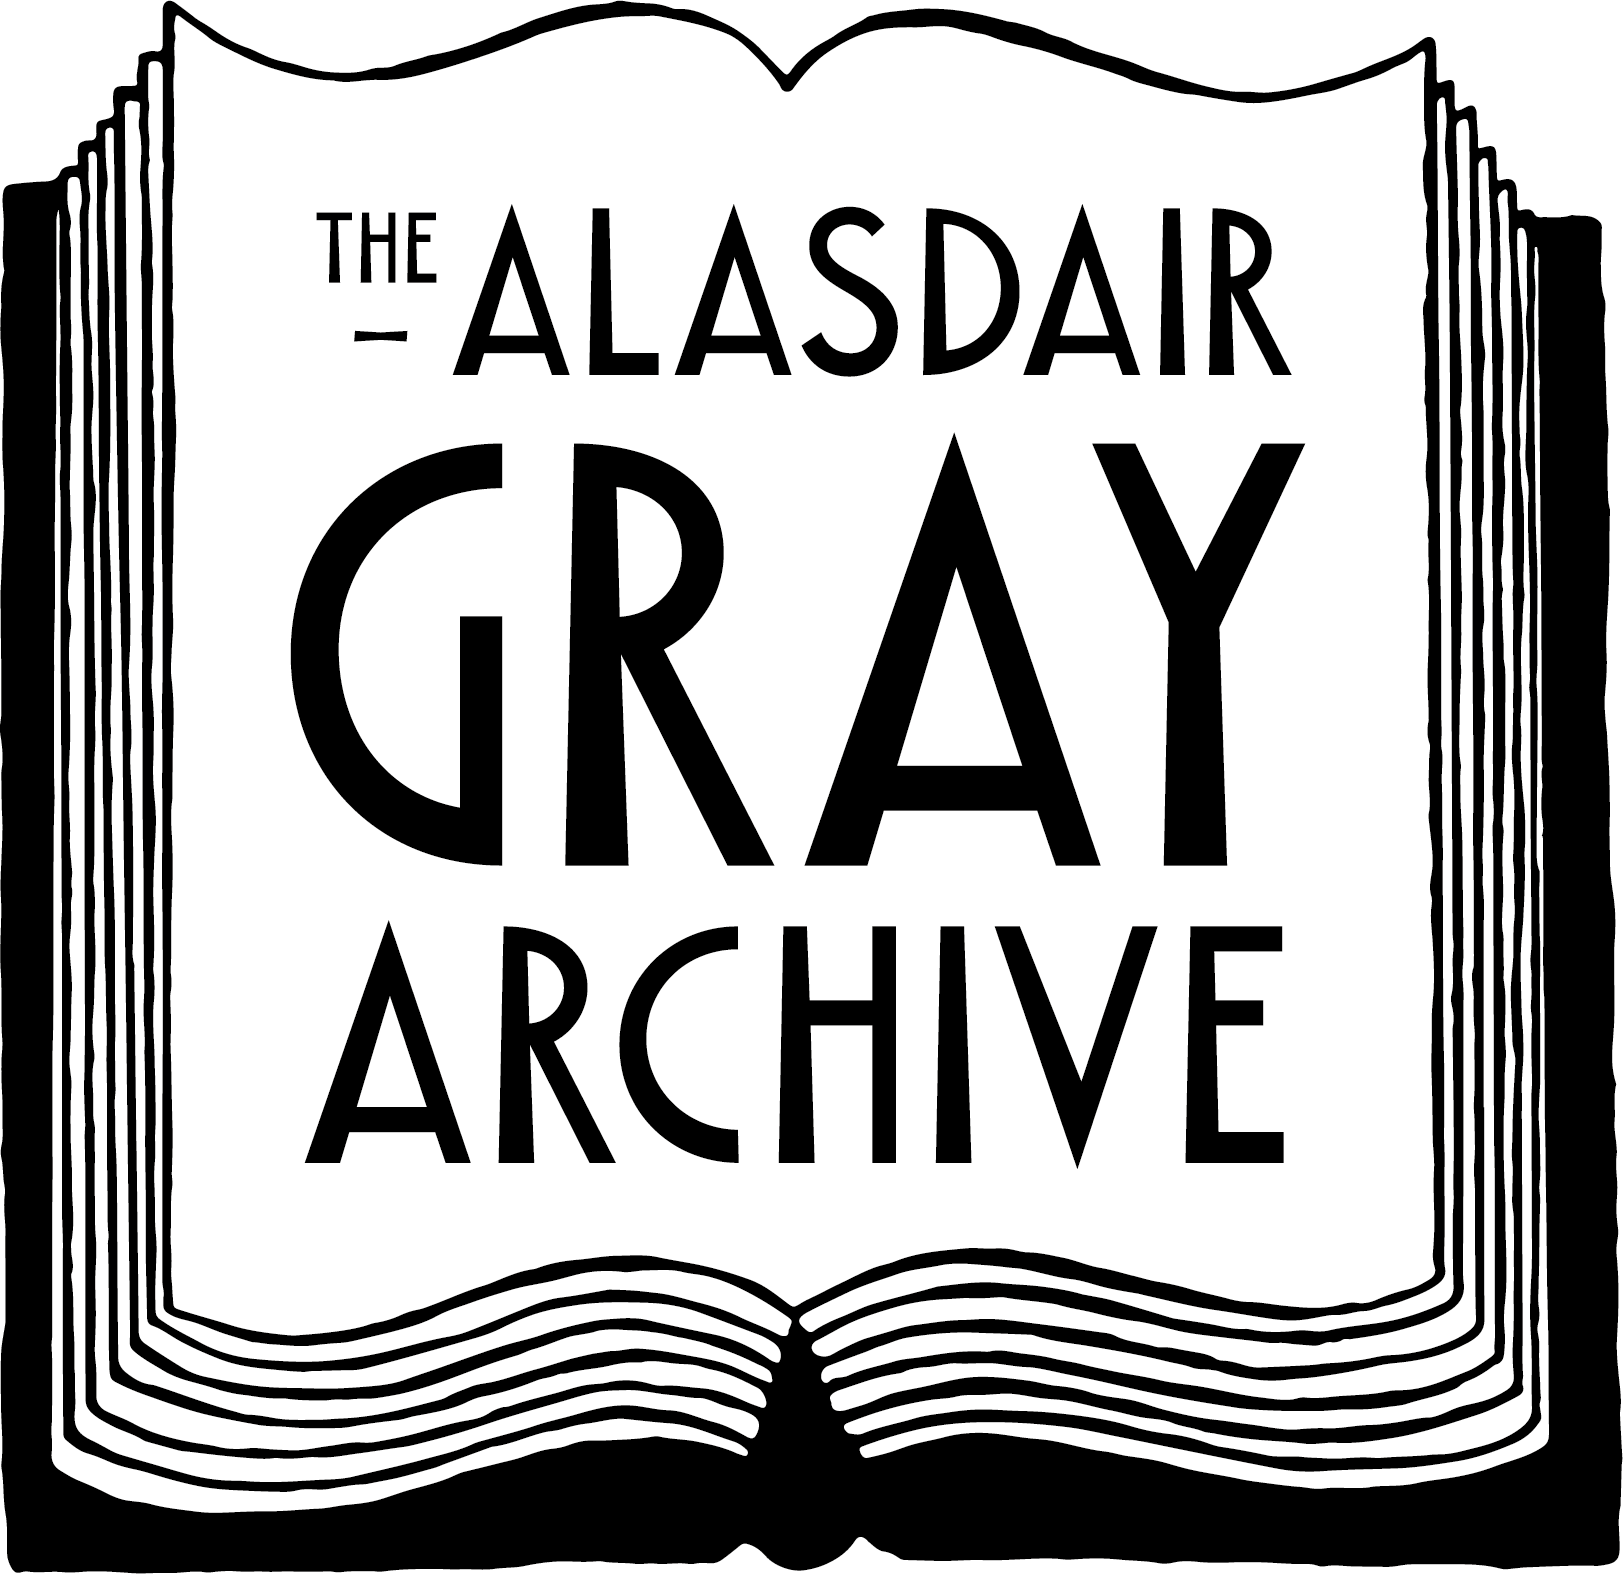 The Alasdair Gray Archive